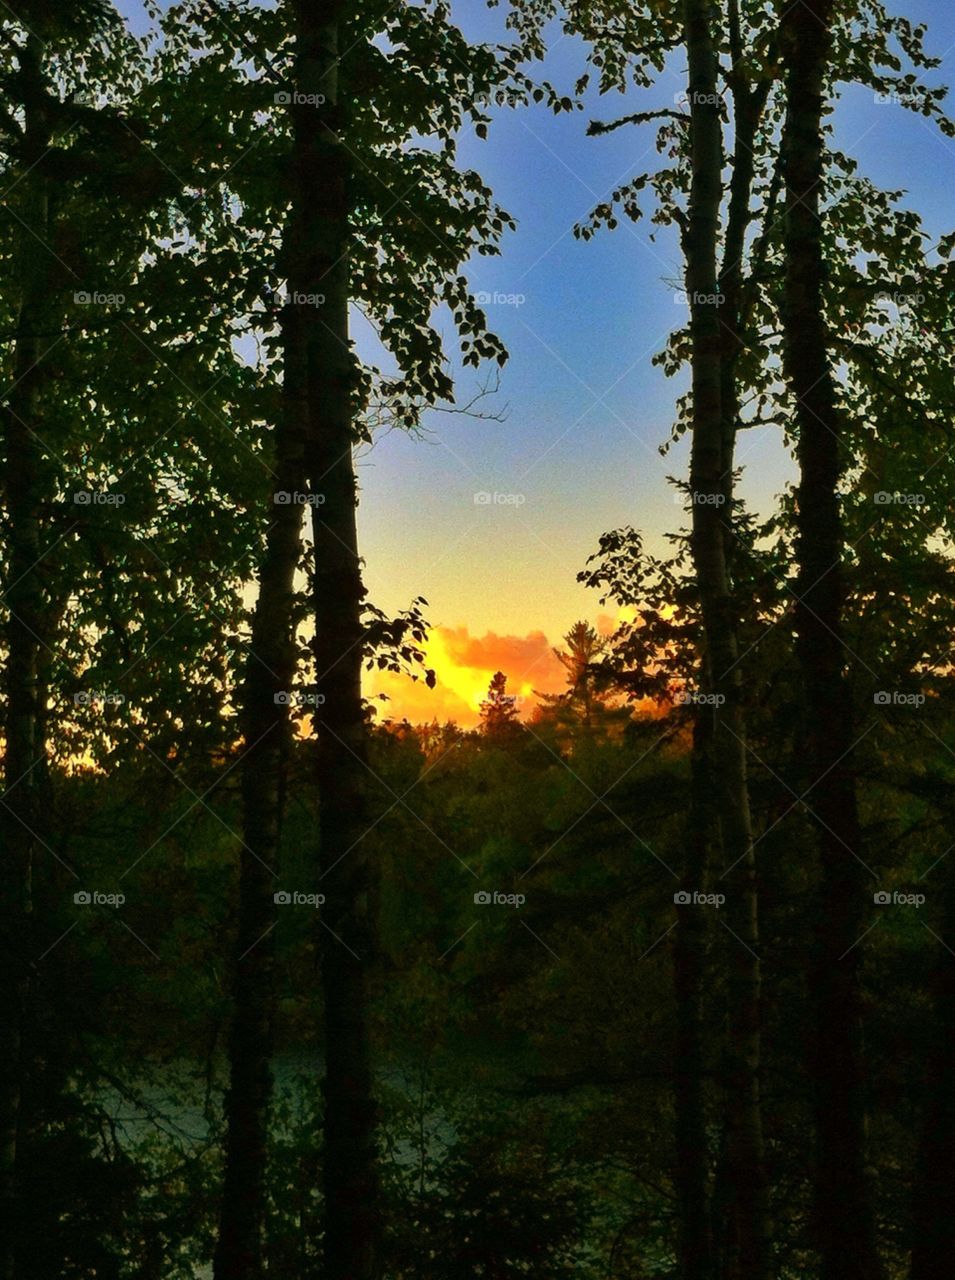 Peeking through the trees. Peeking at the sunset